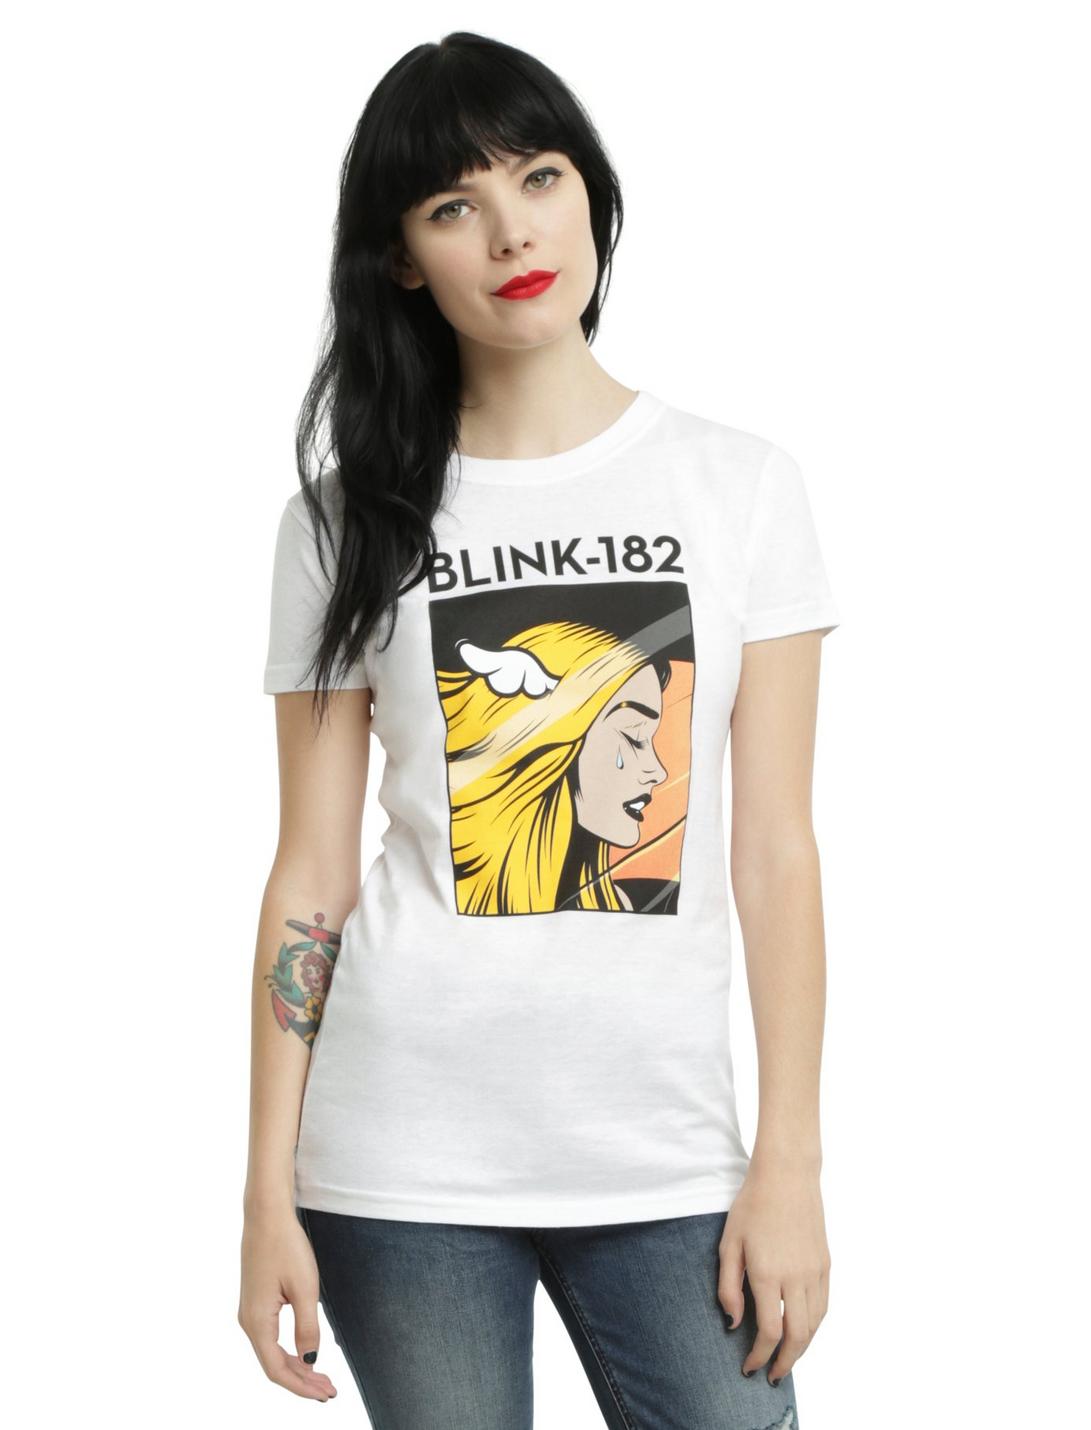 Blink-182 Cryifornia Girl Girls T-Shirt, WHITE, hi-res